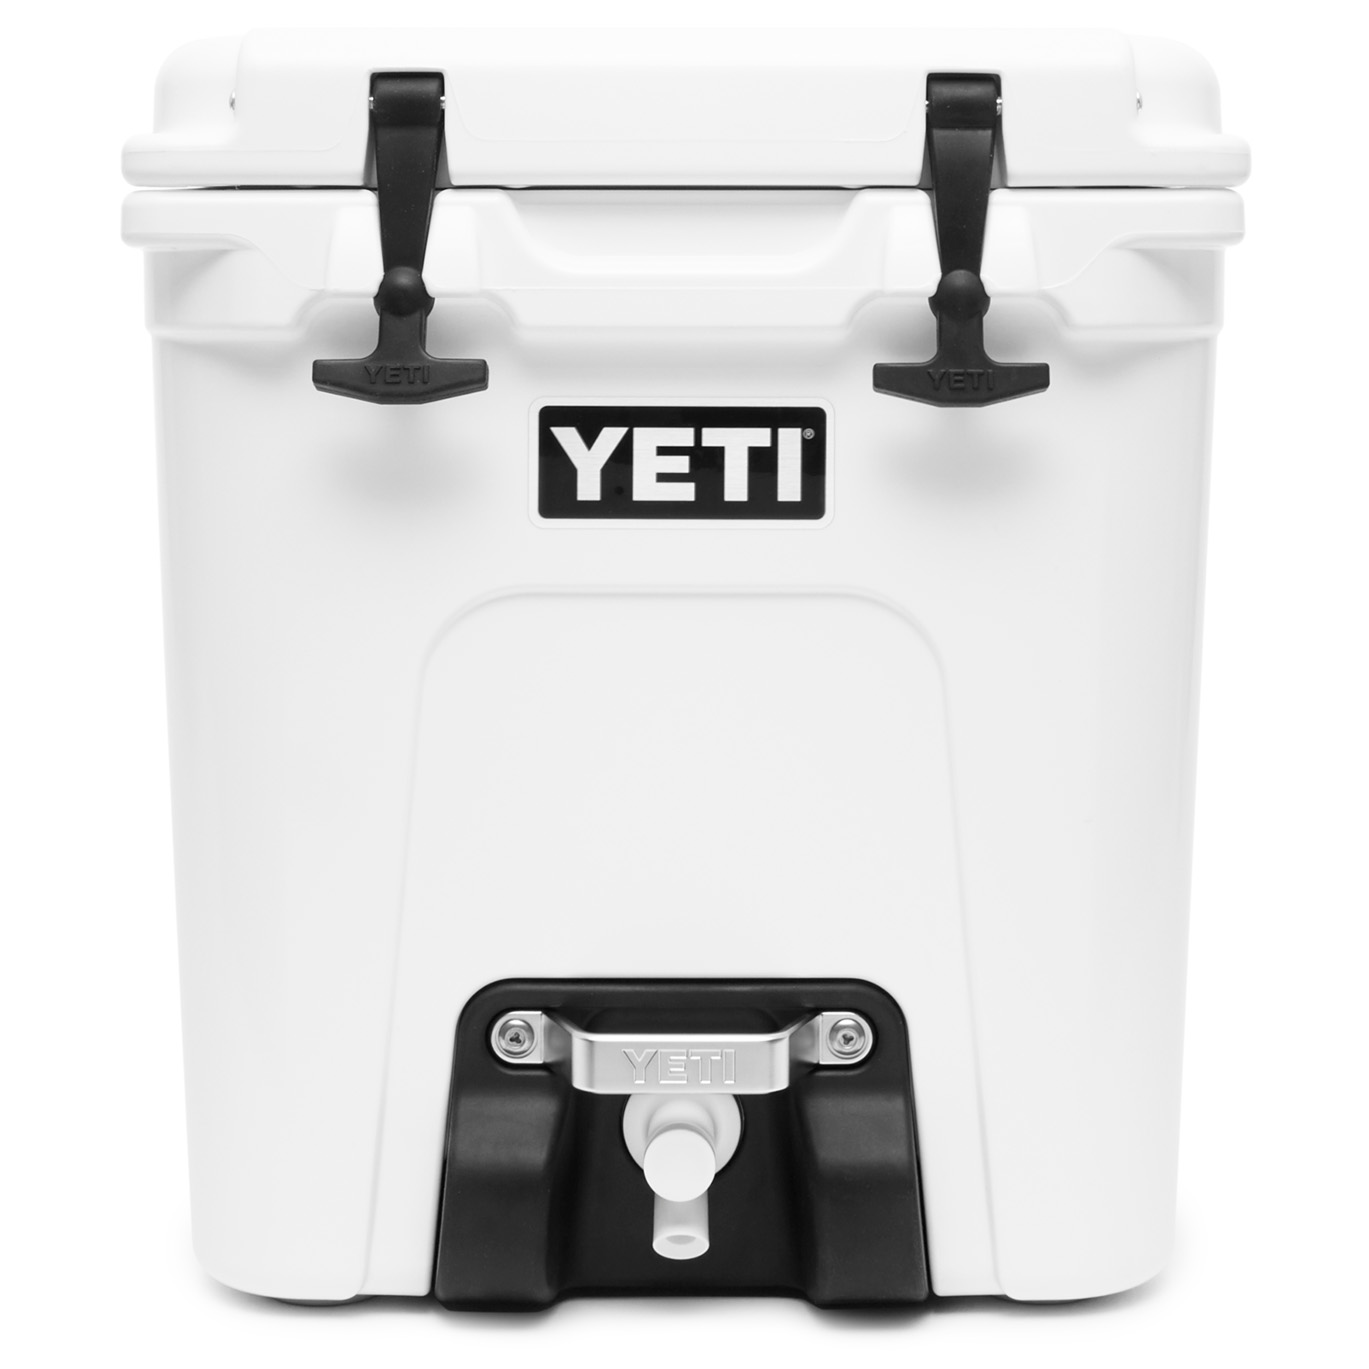 Yeti Silo 6 Gallon Water Cooler